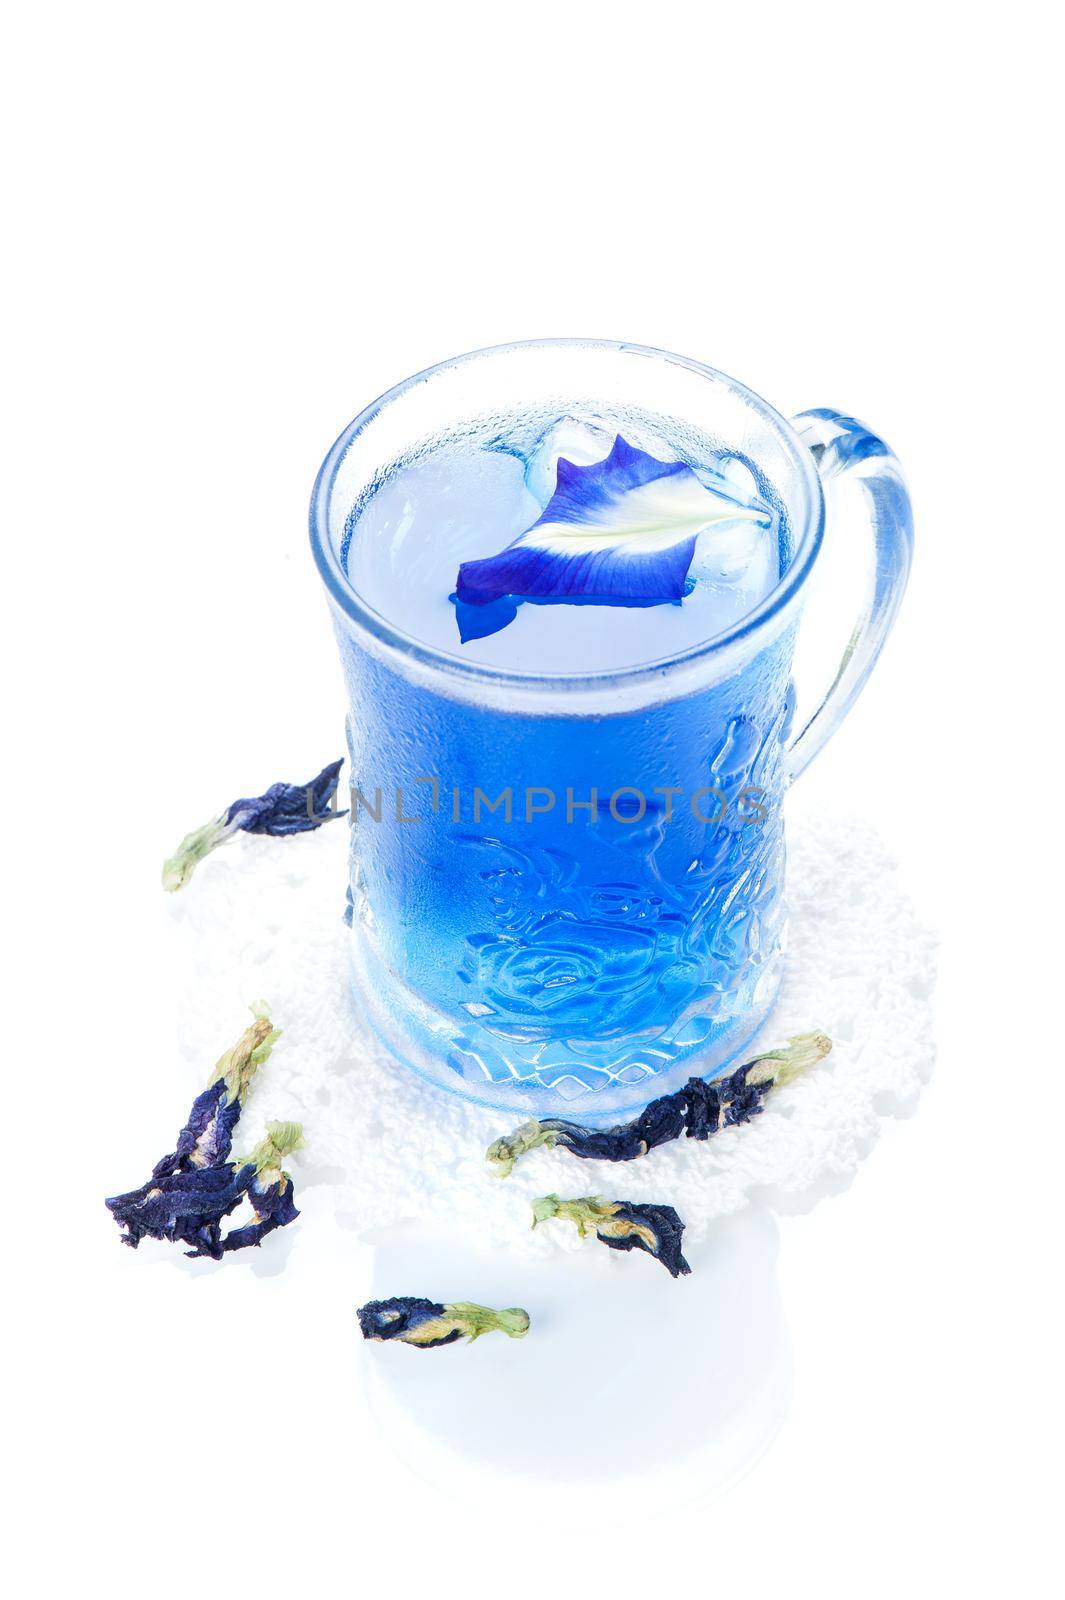 butterfly pea flower drink, herbal tea